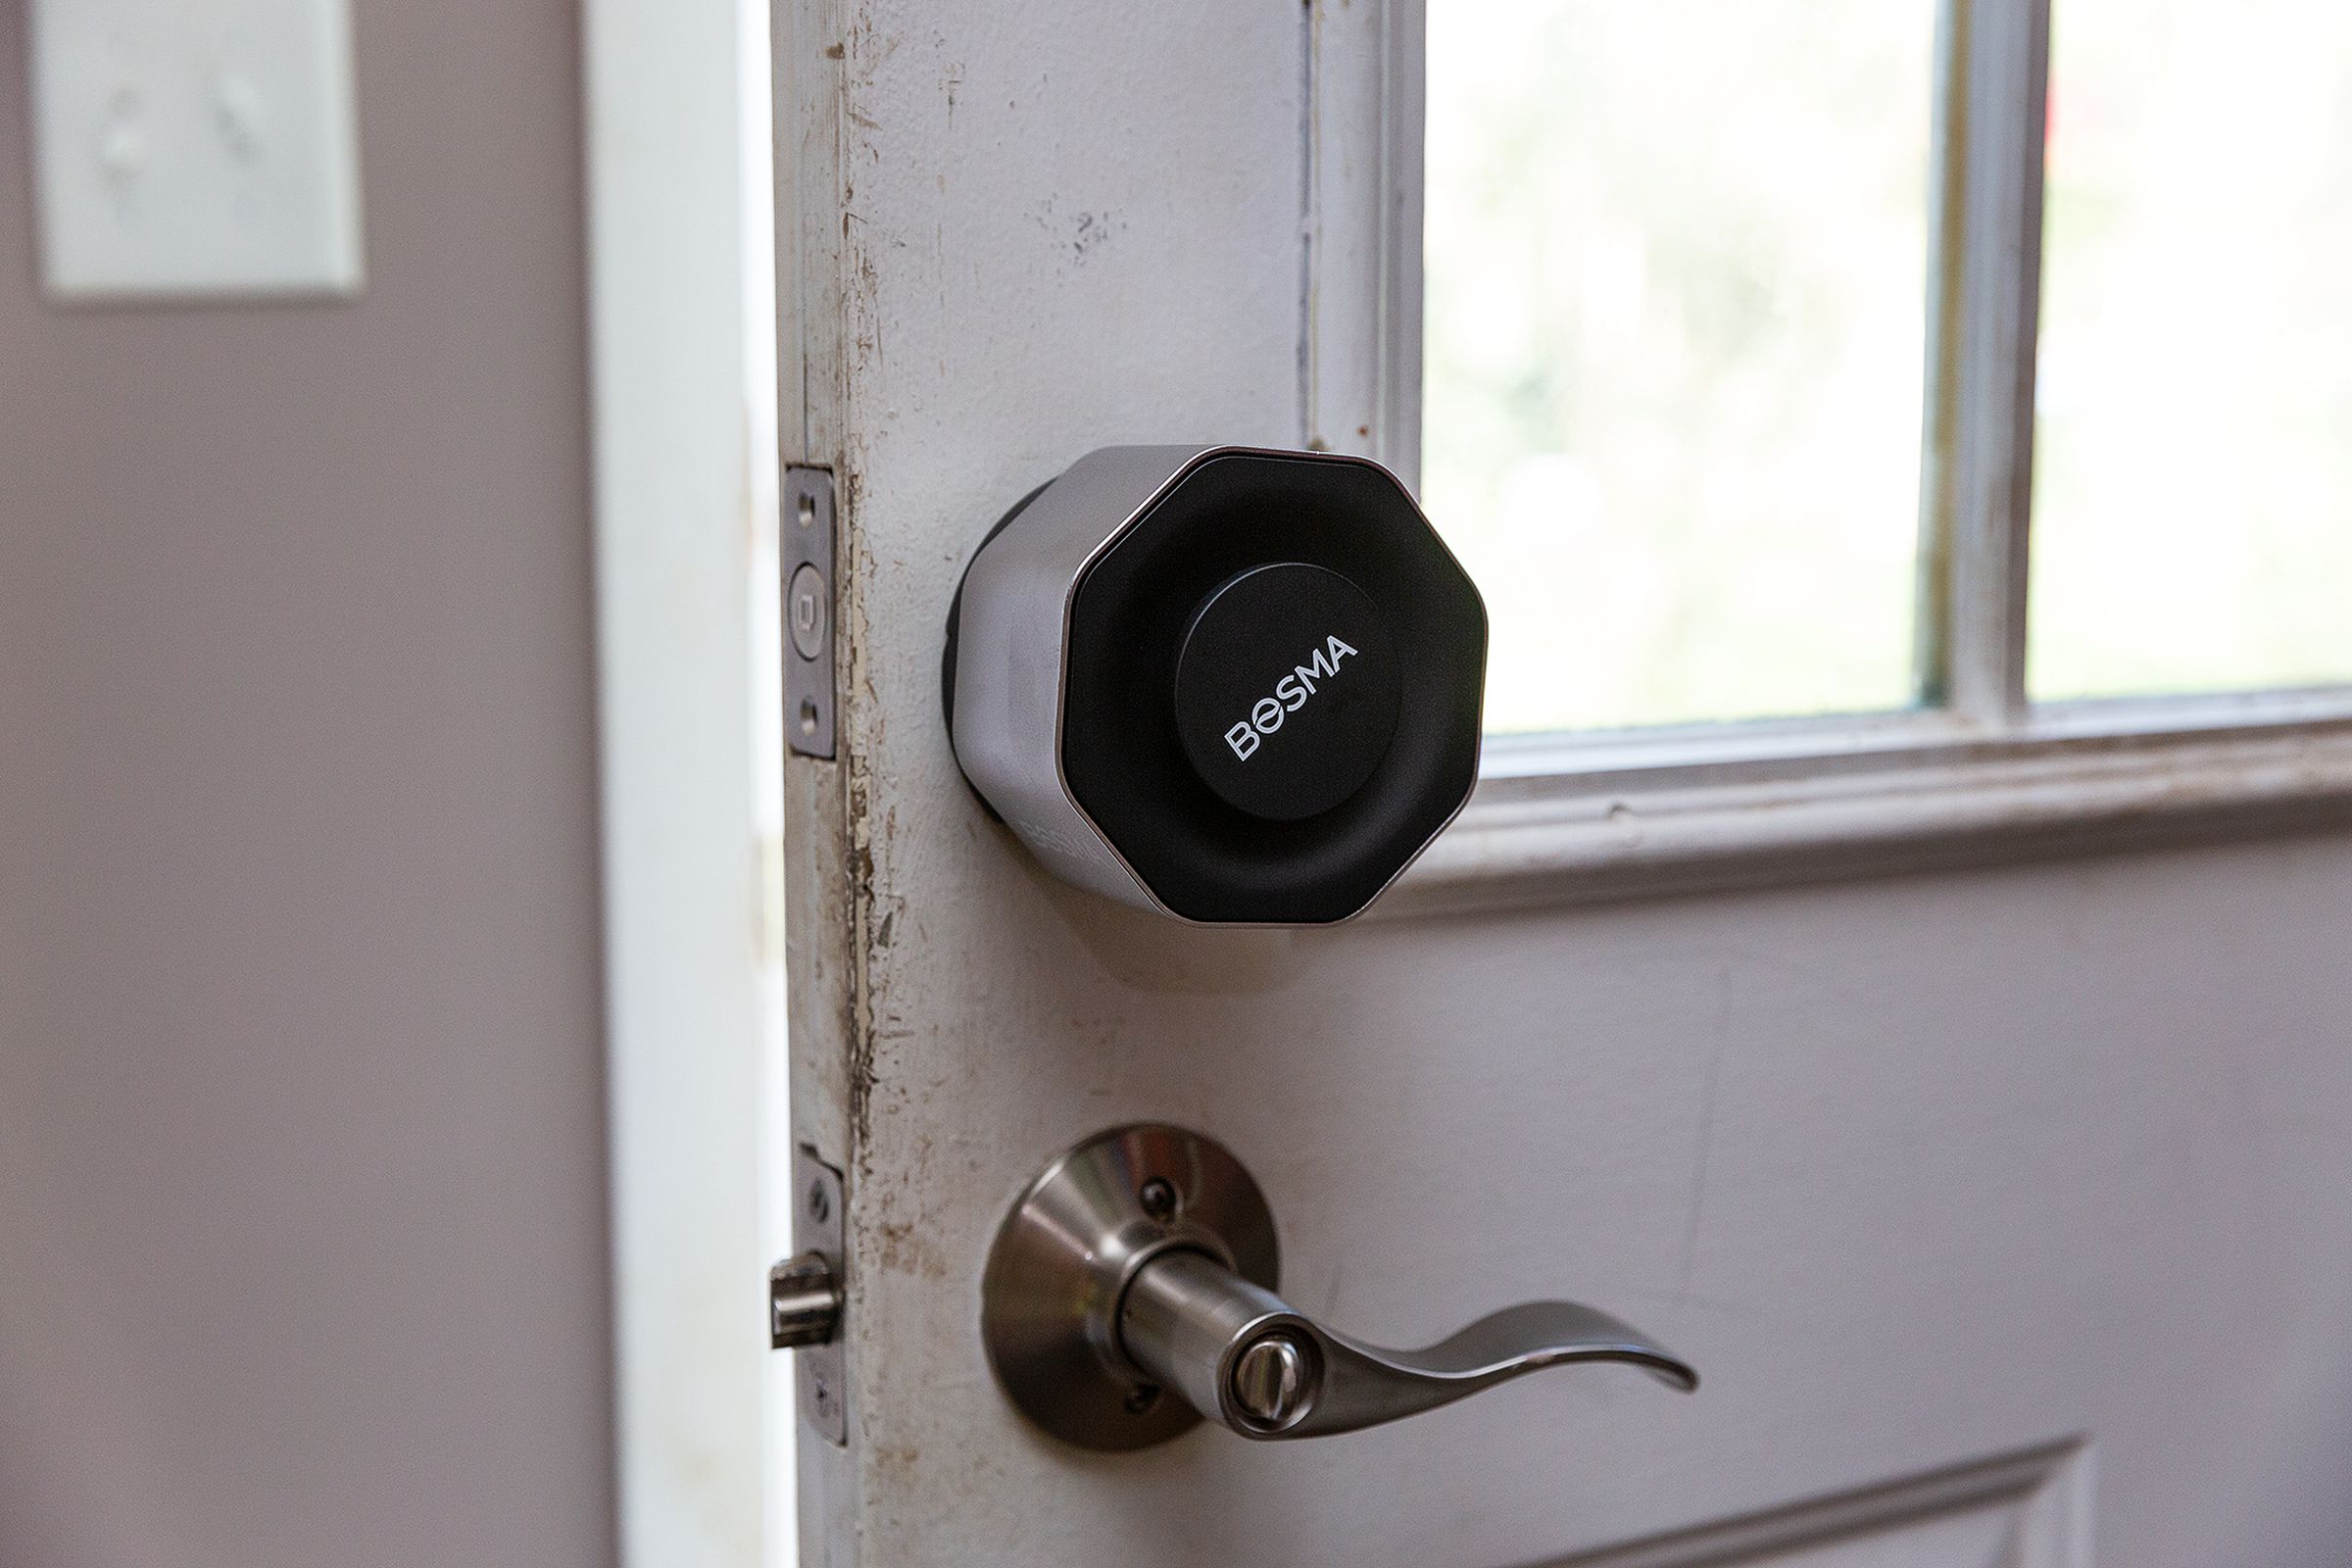 The Bosma Aegis is a chunky retrofit door lock.